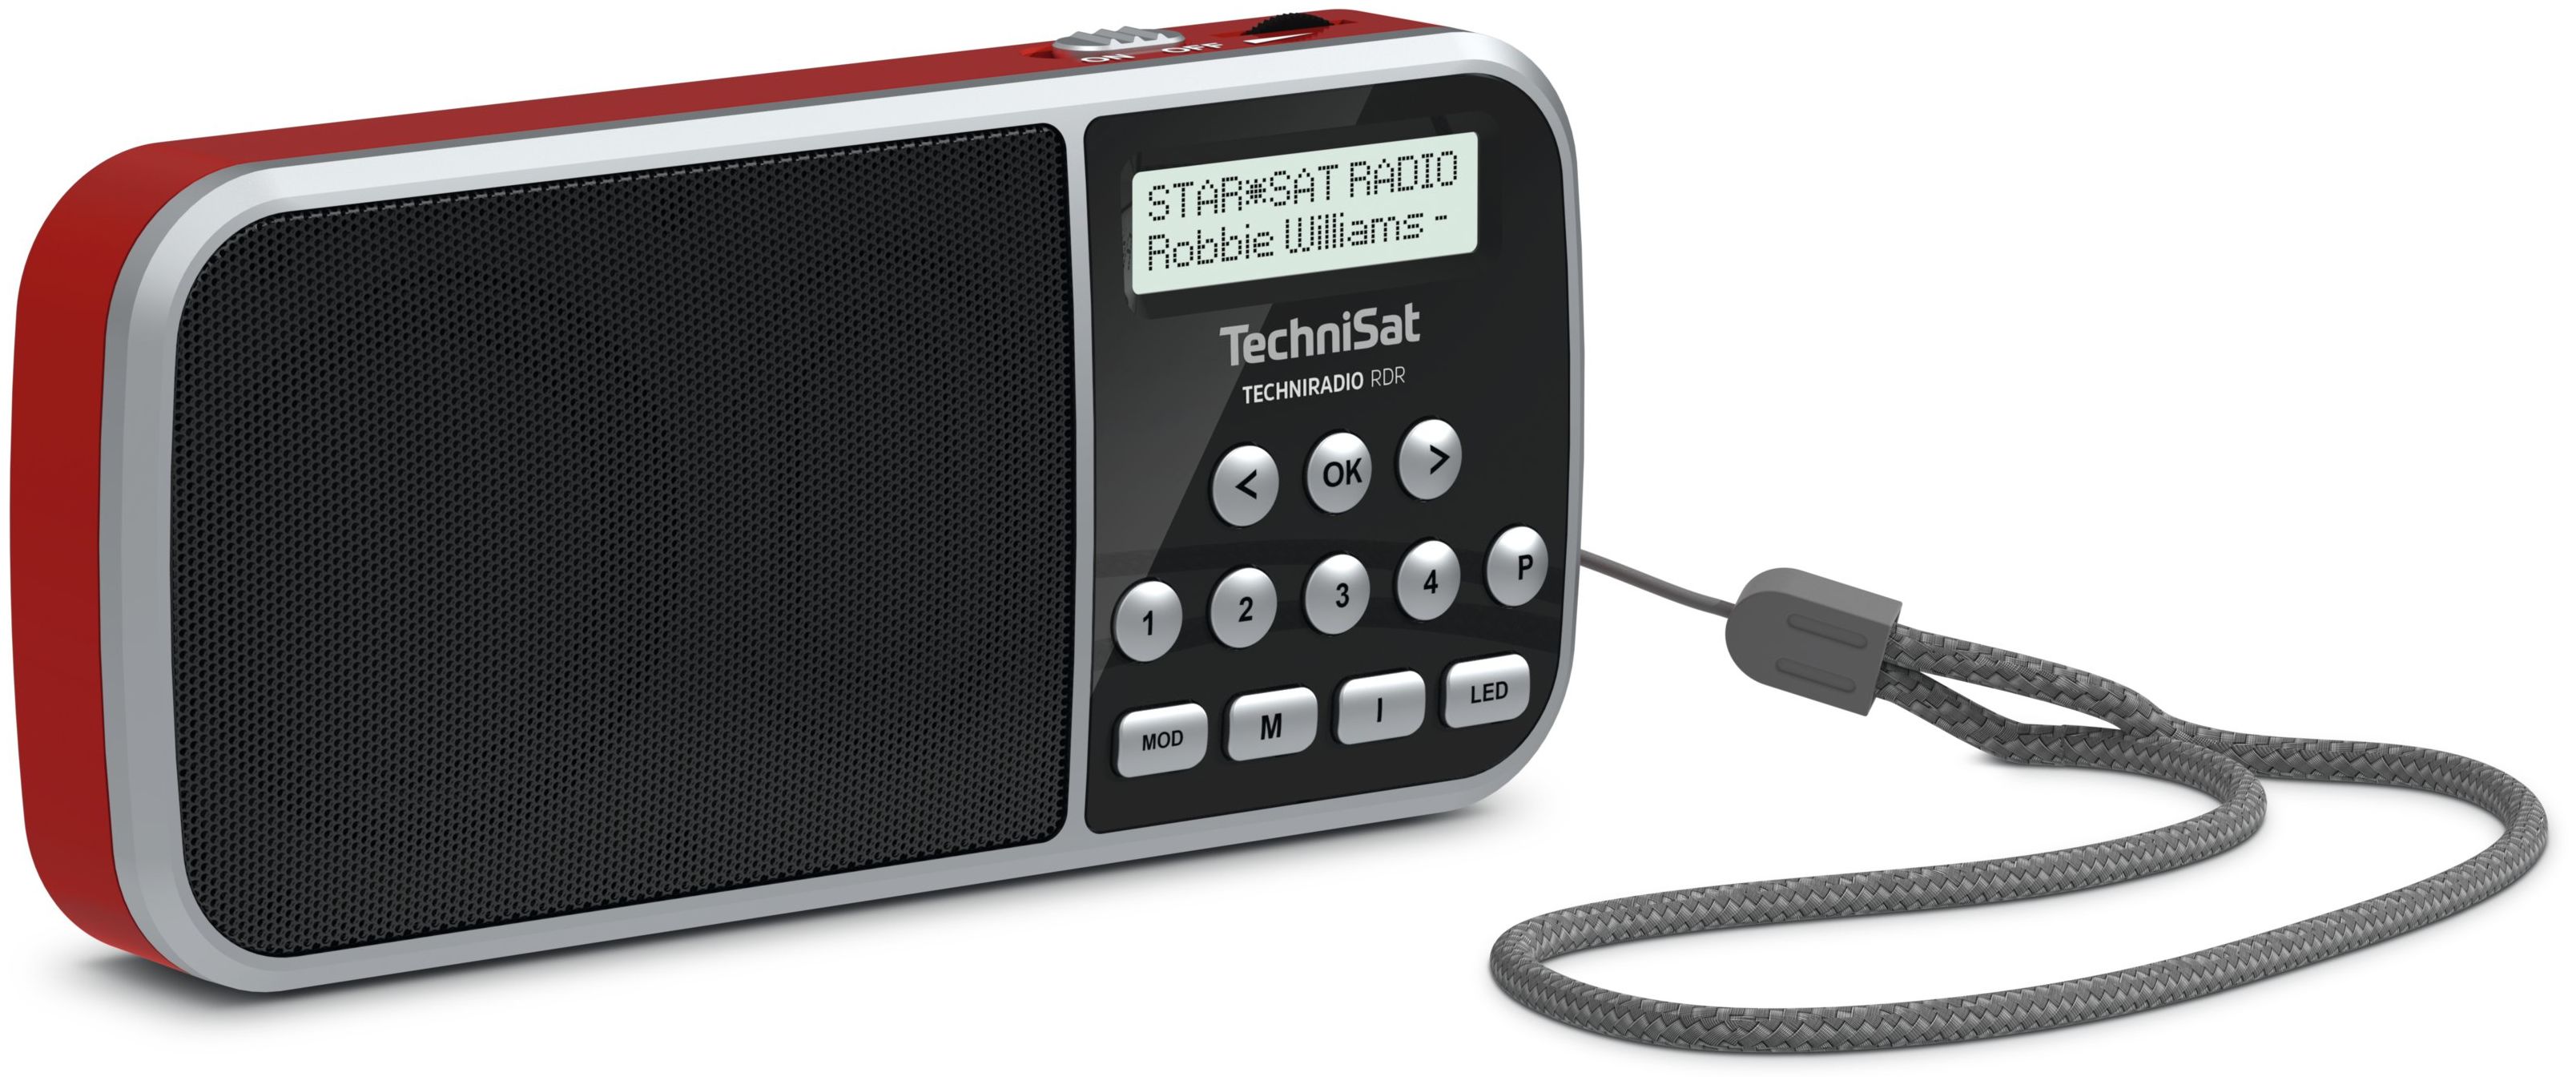 TechniSat TechniRadio RDR DAB+, FM Tragbar Radio (Rot) von expert  Technomarkt